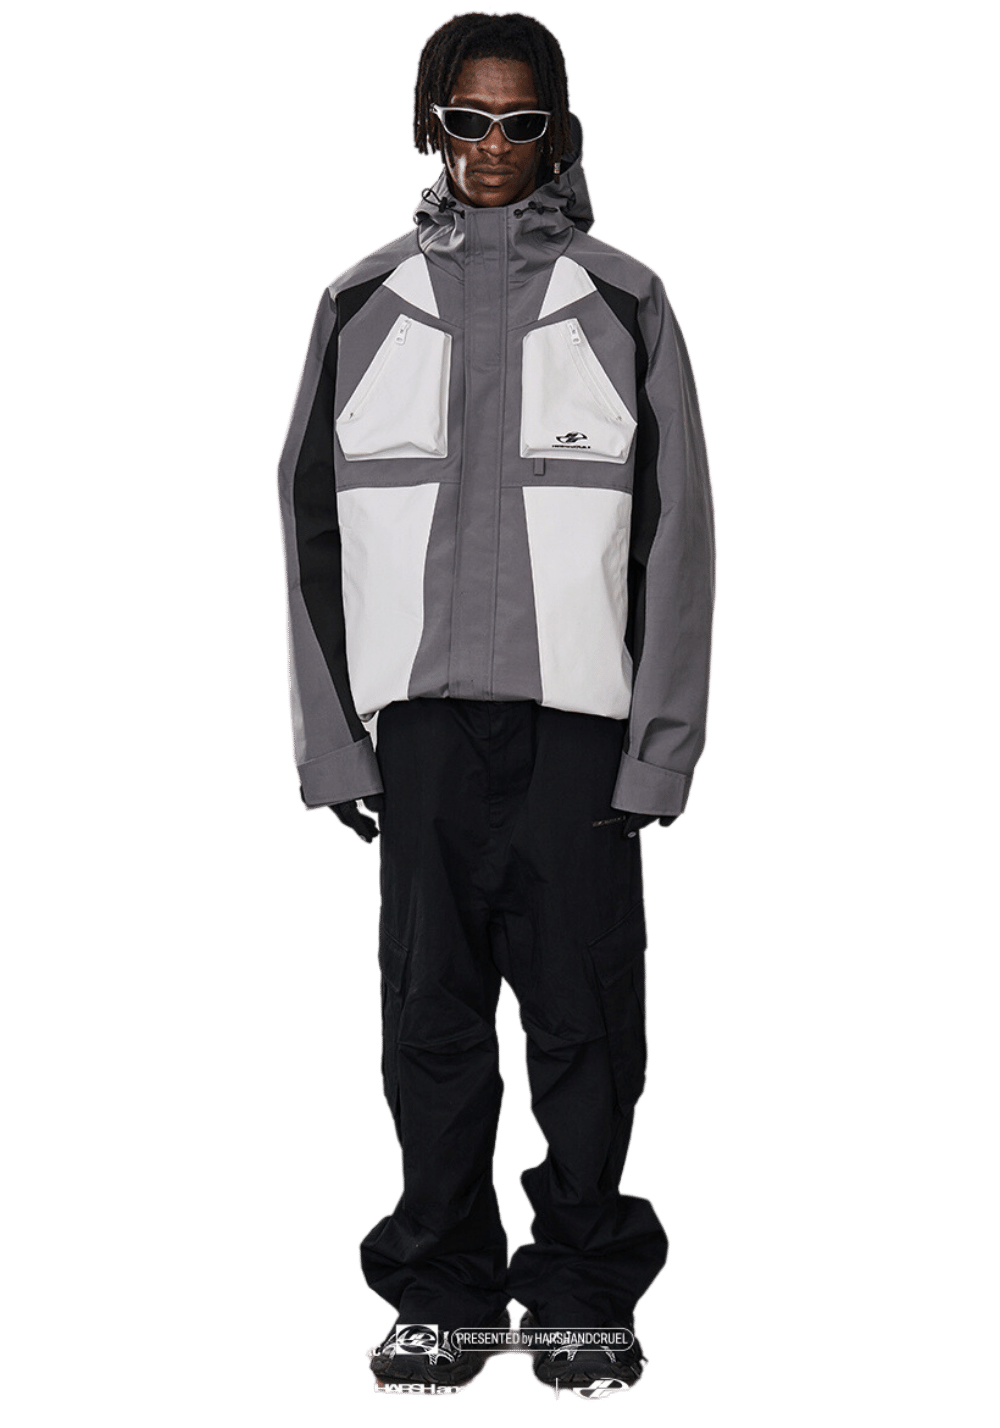 Deconstructed Patchwork Jacket - PSYLOS 1, Deconstructed Patchwork Jacket, Jacket, HARSH AND CRUEL, PSYLOS 1